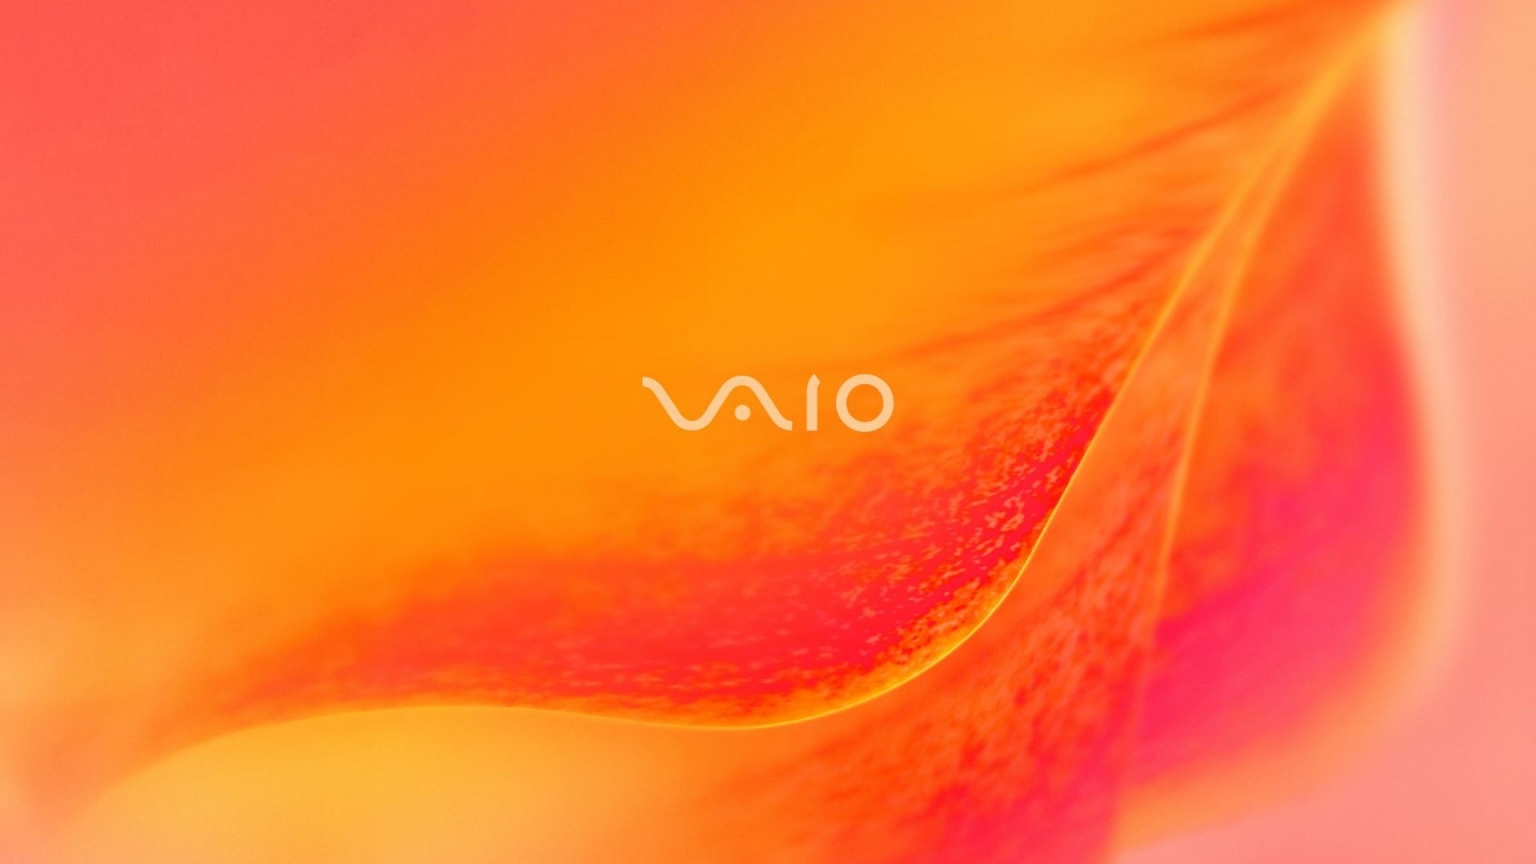 Sony Vaio Orange blossom for 1536 x 864 HDTV resolution